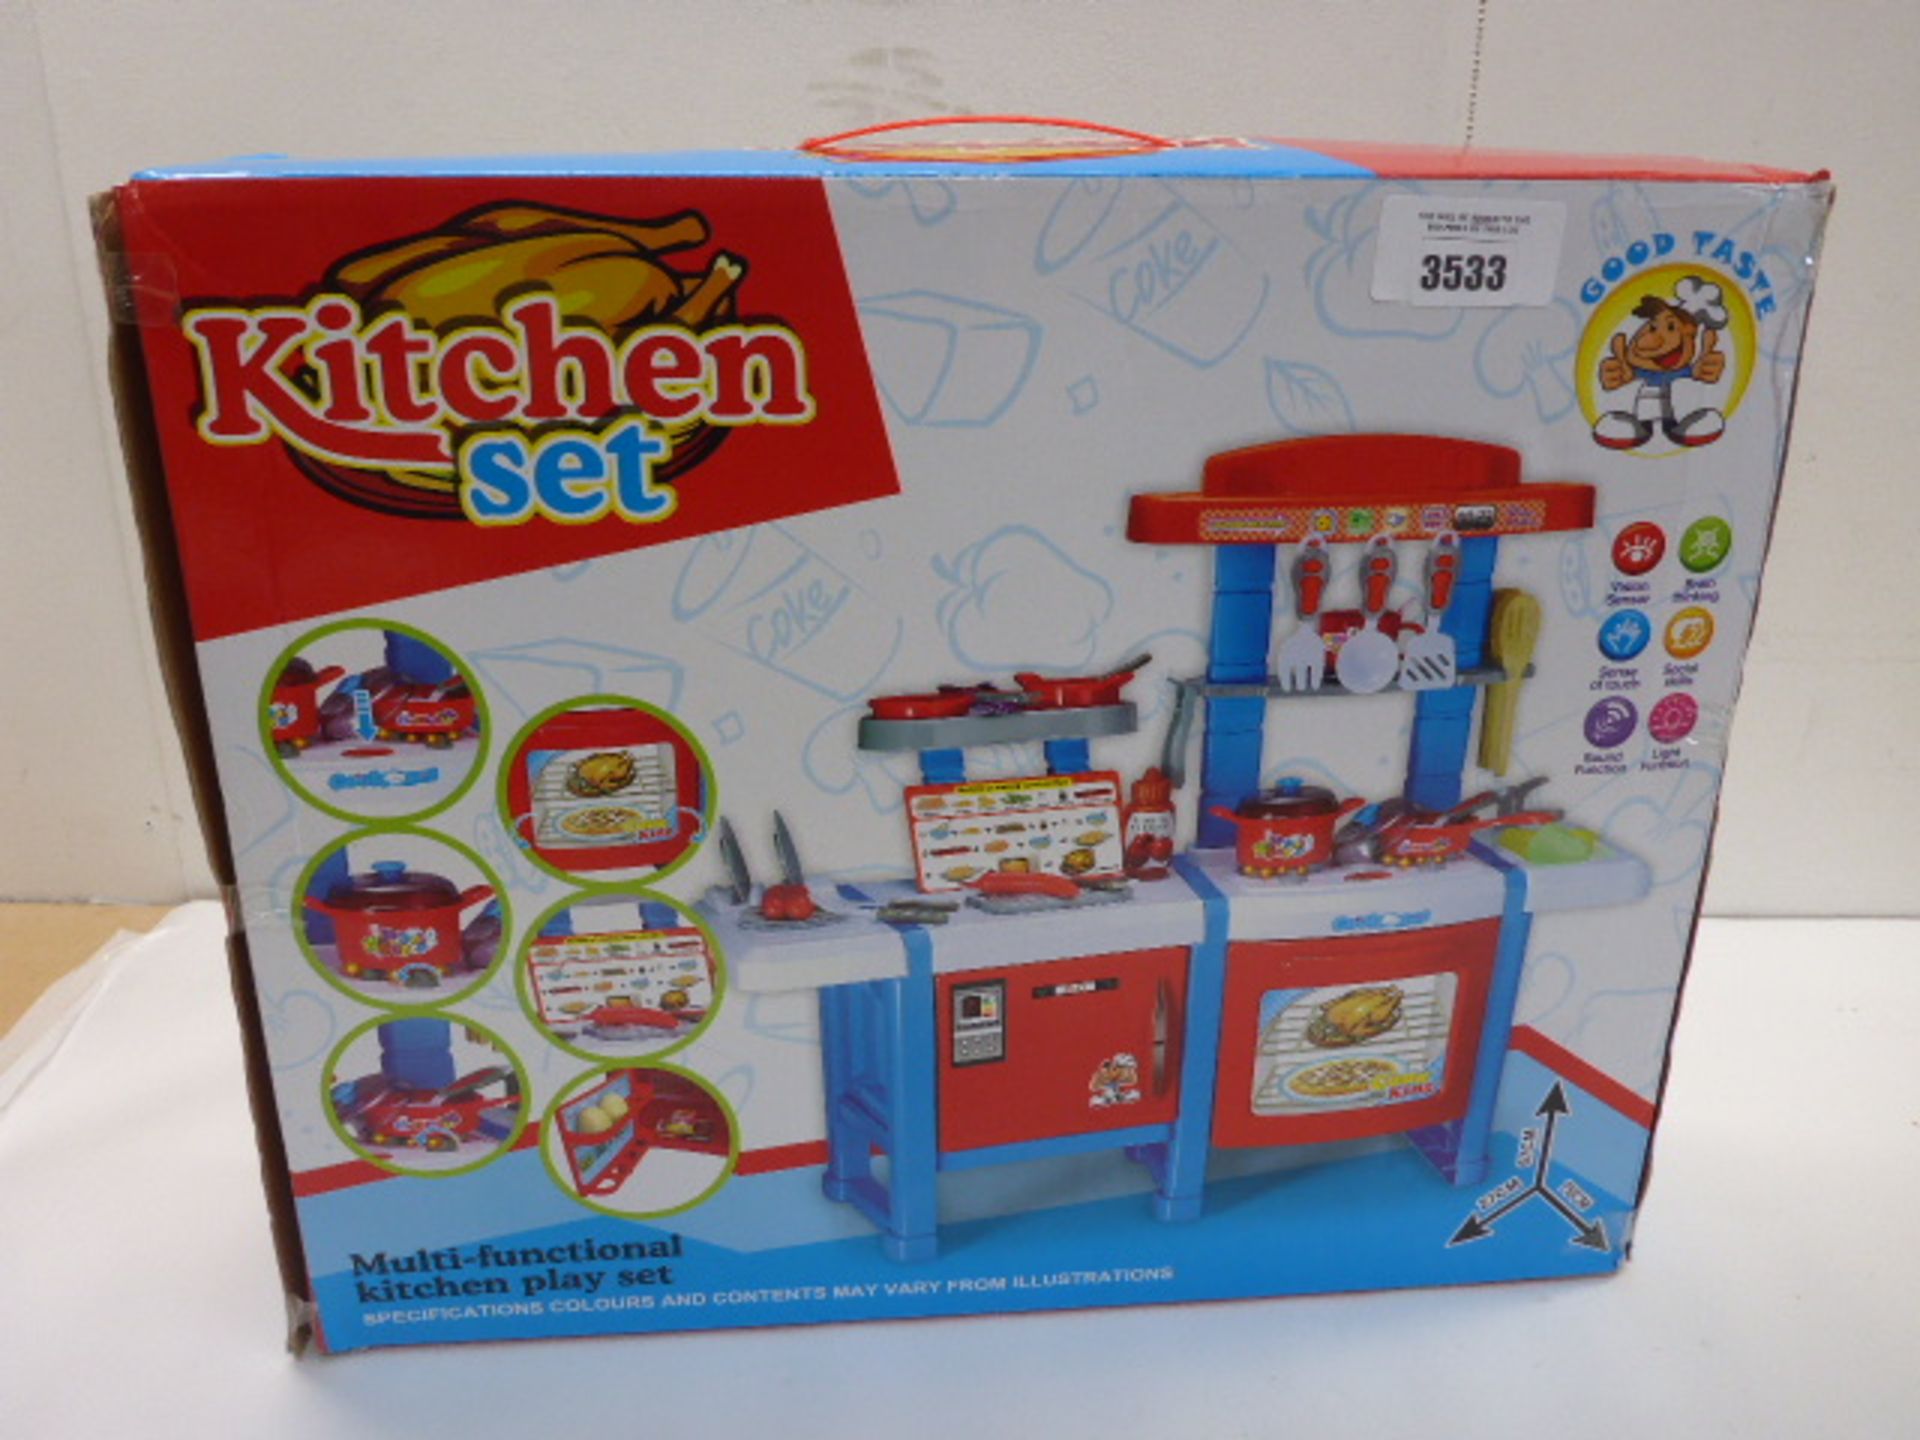 Multi-functional kitchen play set